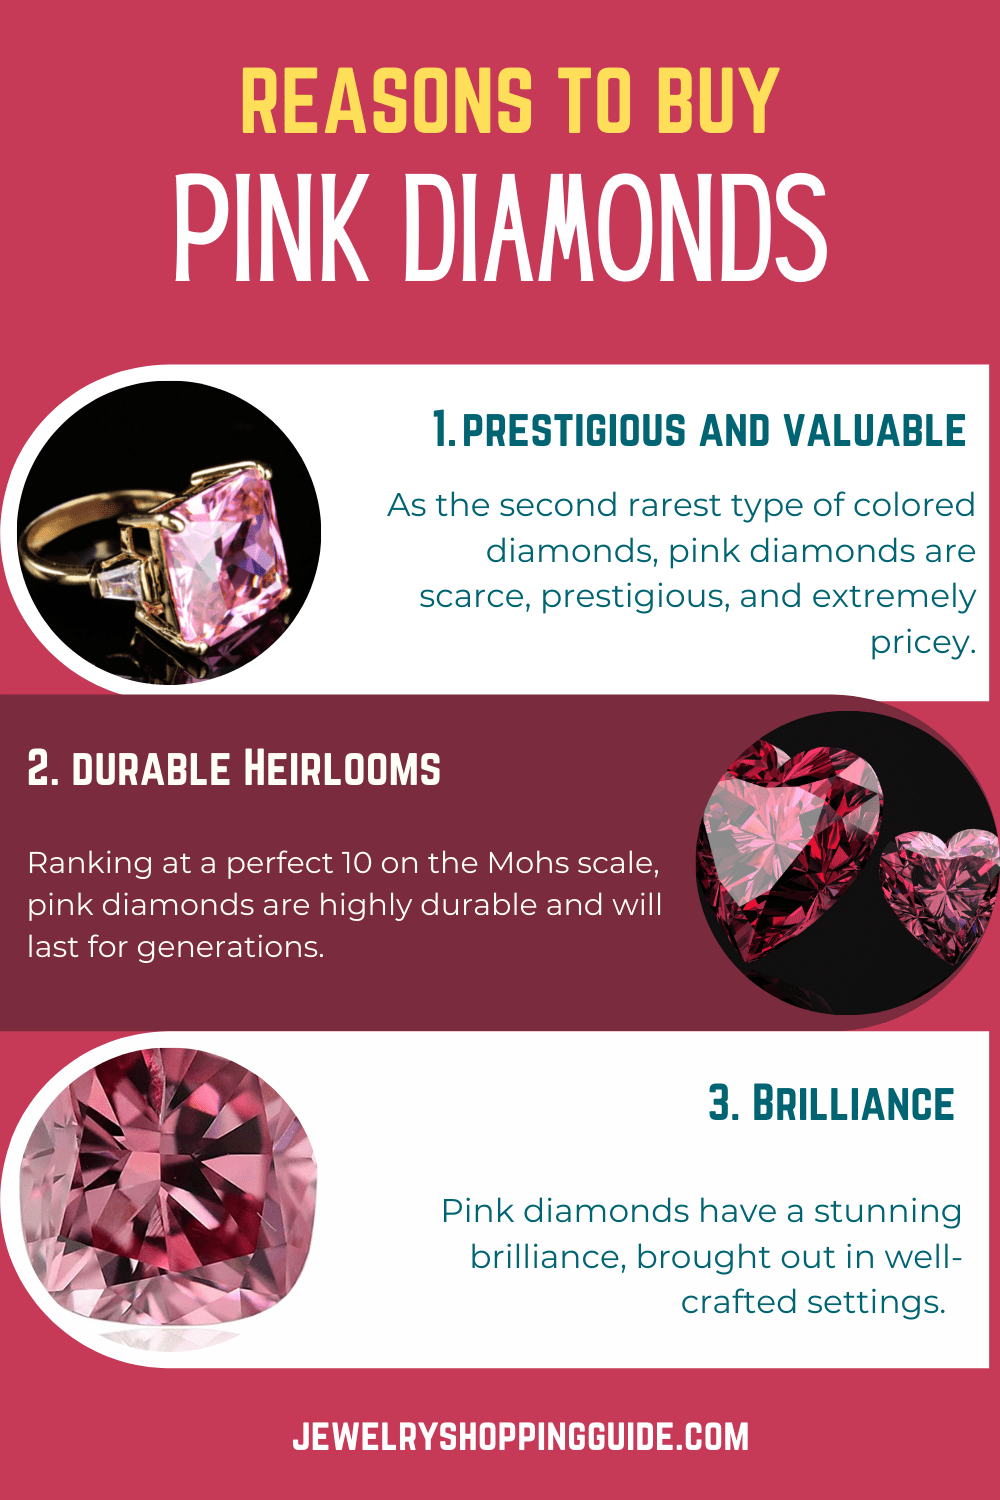 Why choose pink diamonds